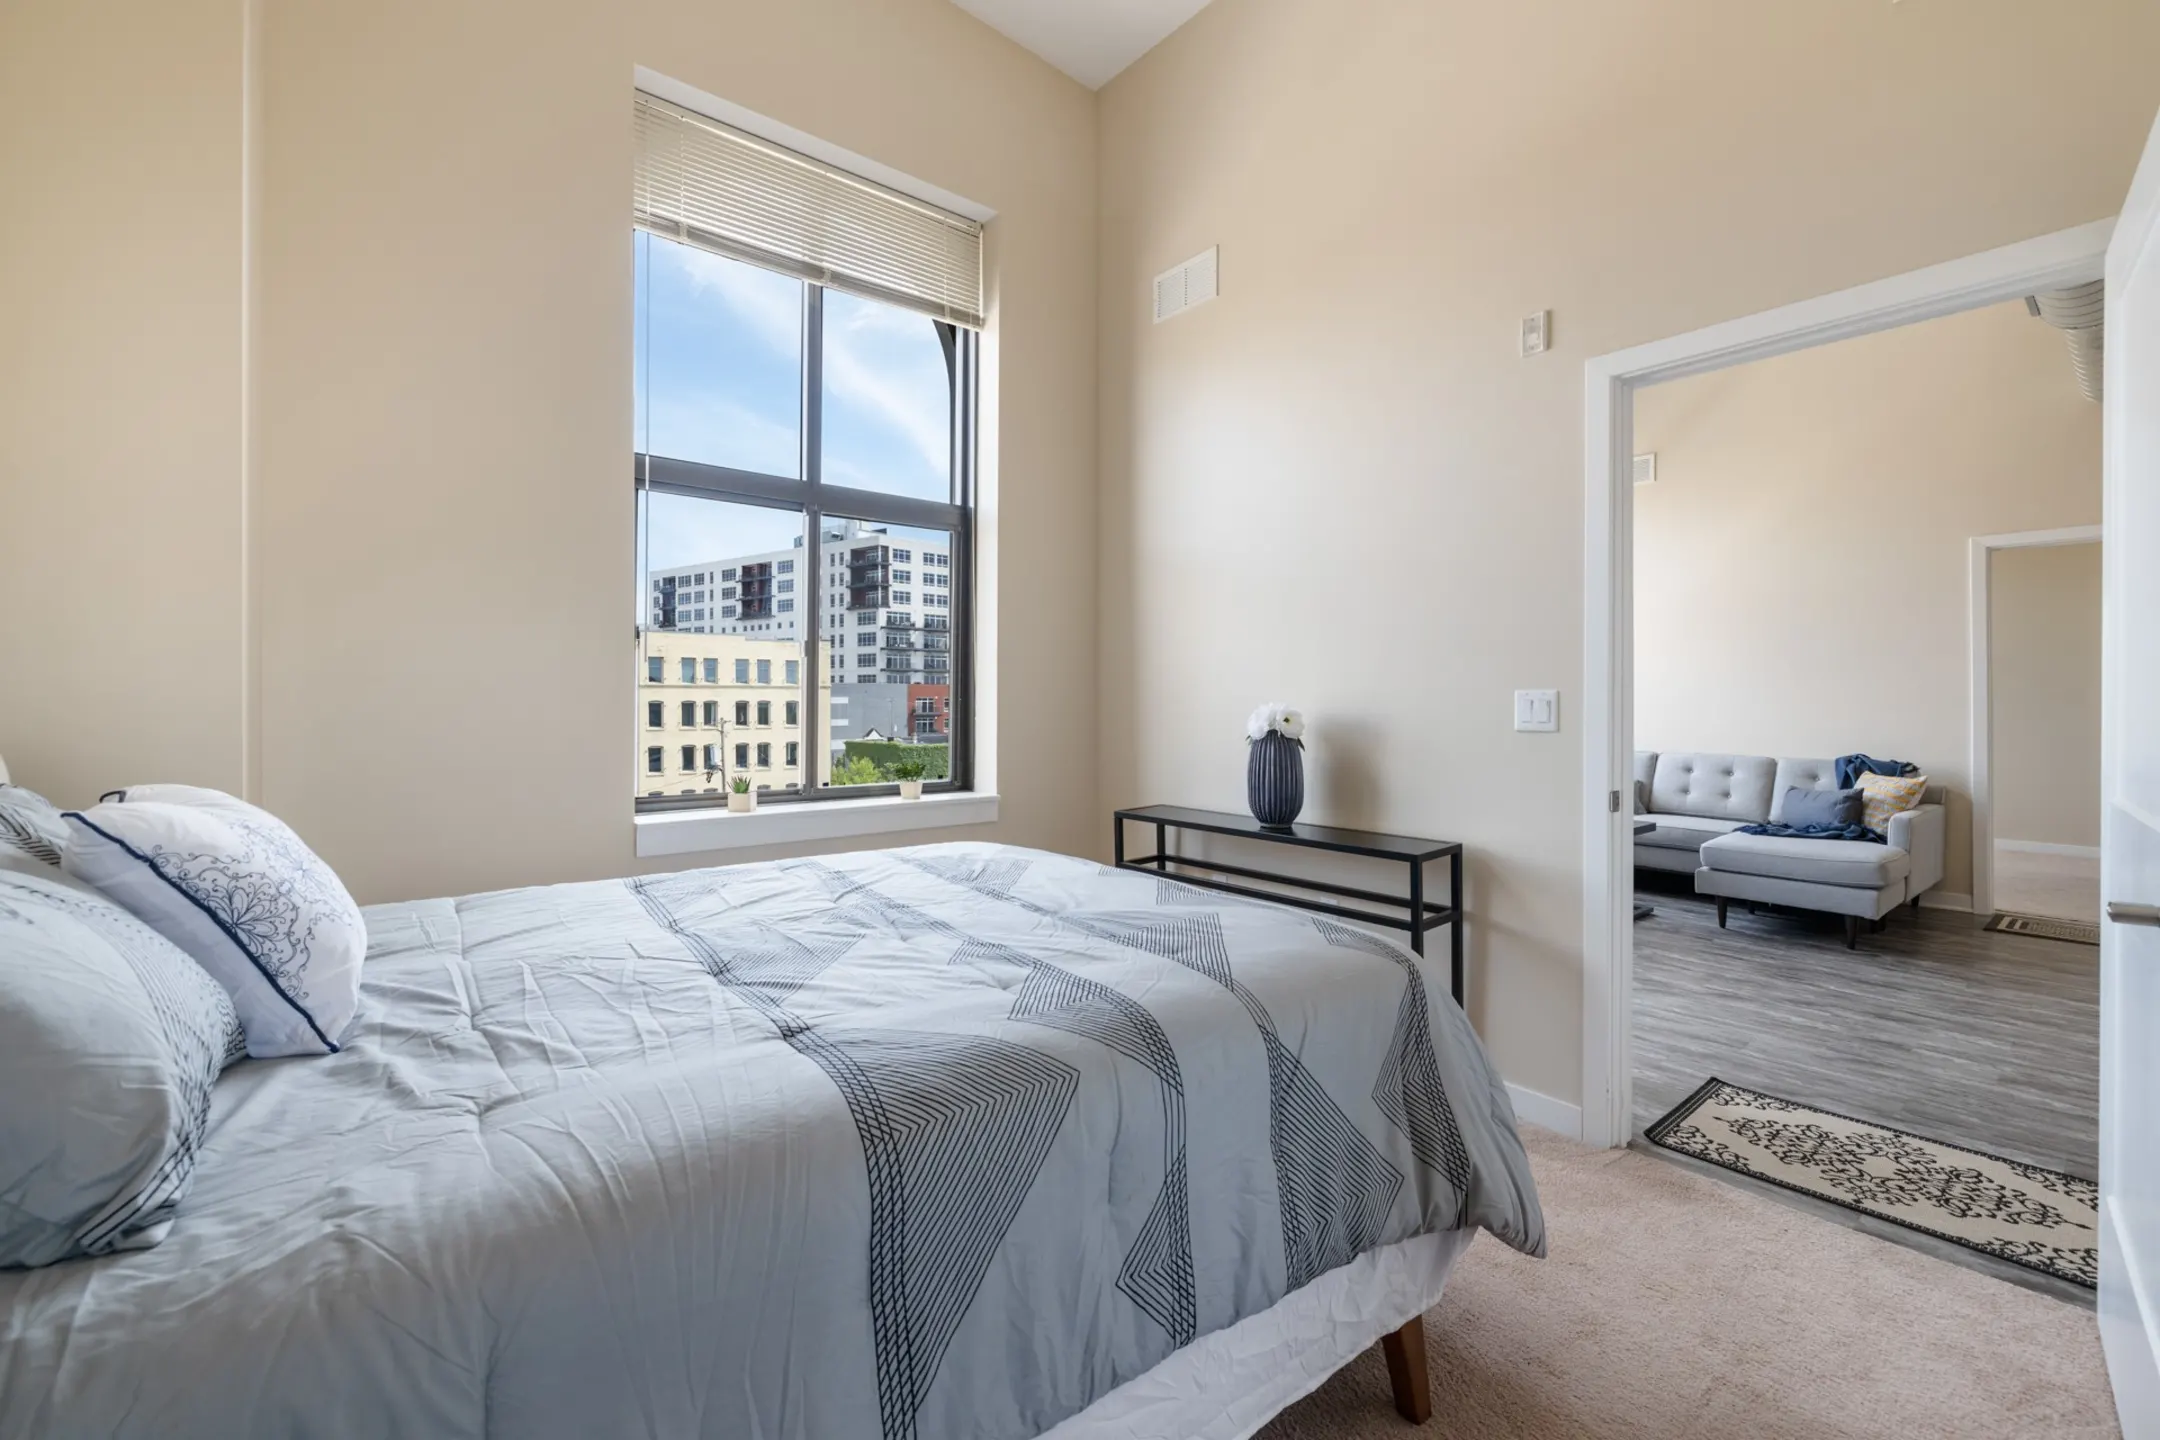 Bedroom - Artisan Lofts Apartments - Milwaukee, WI